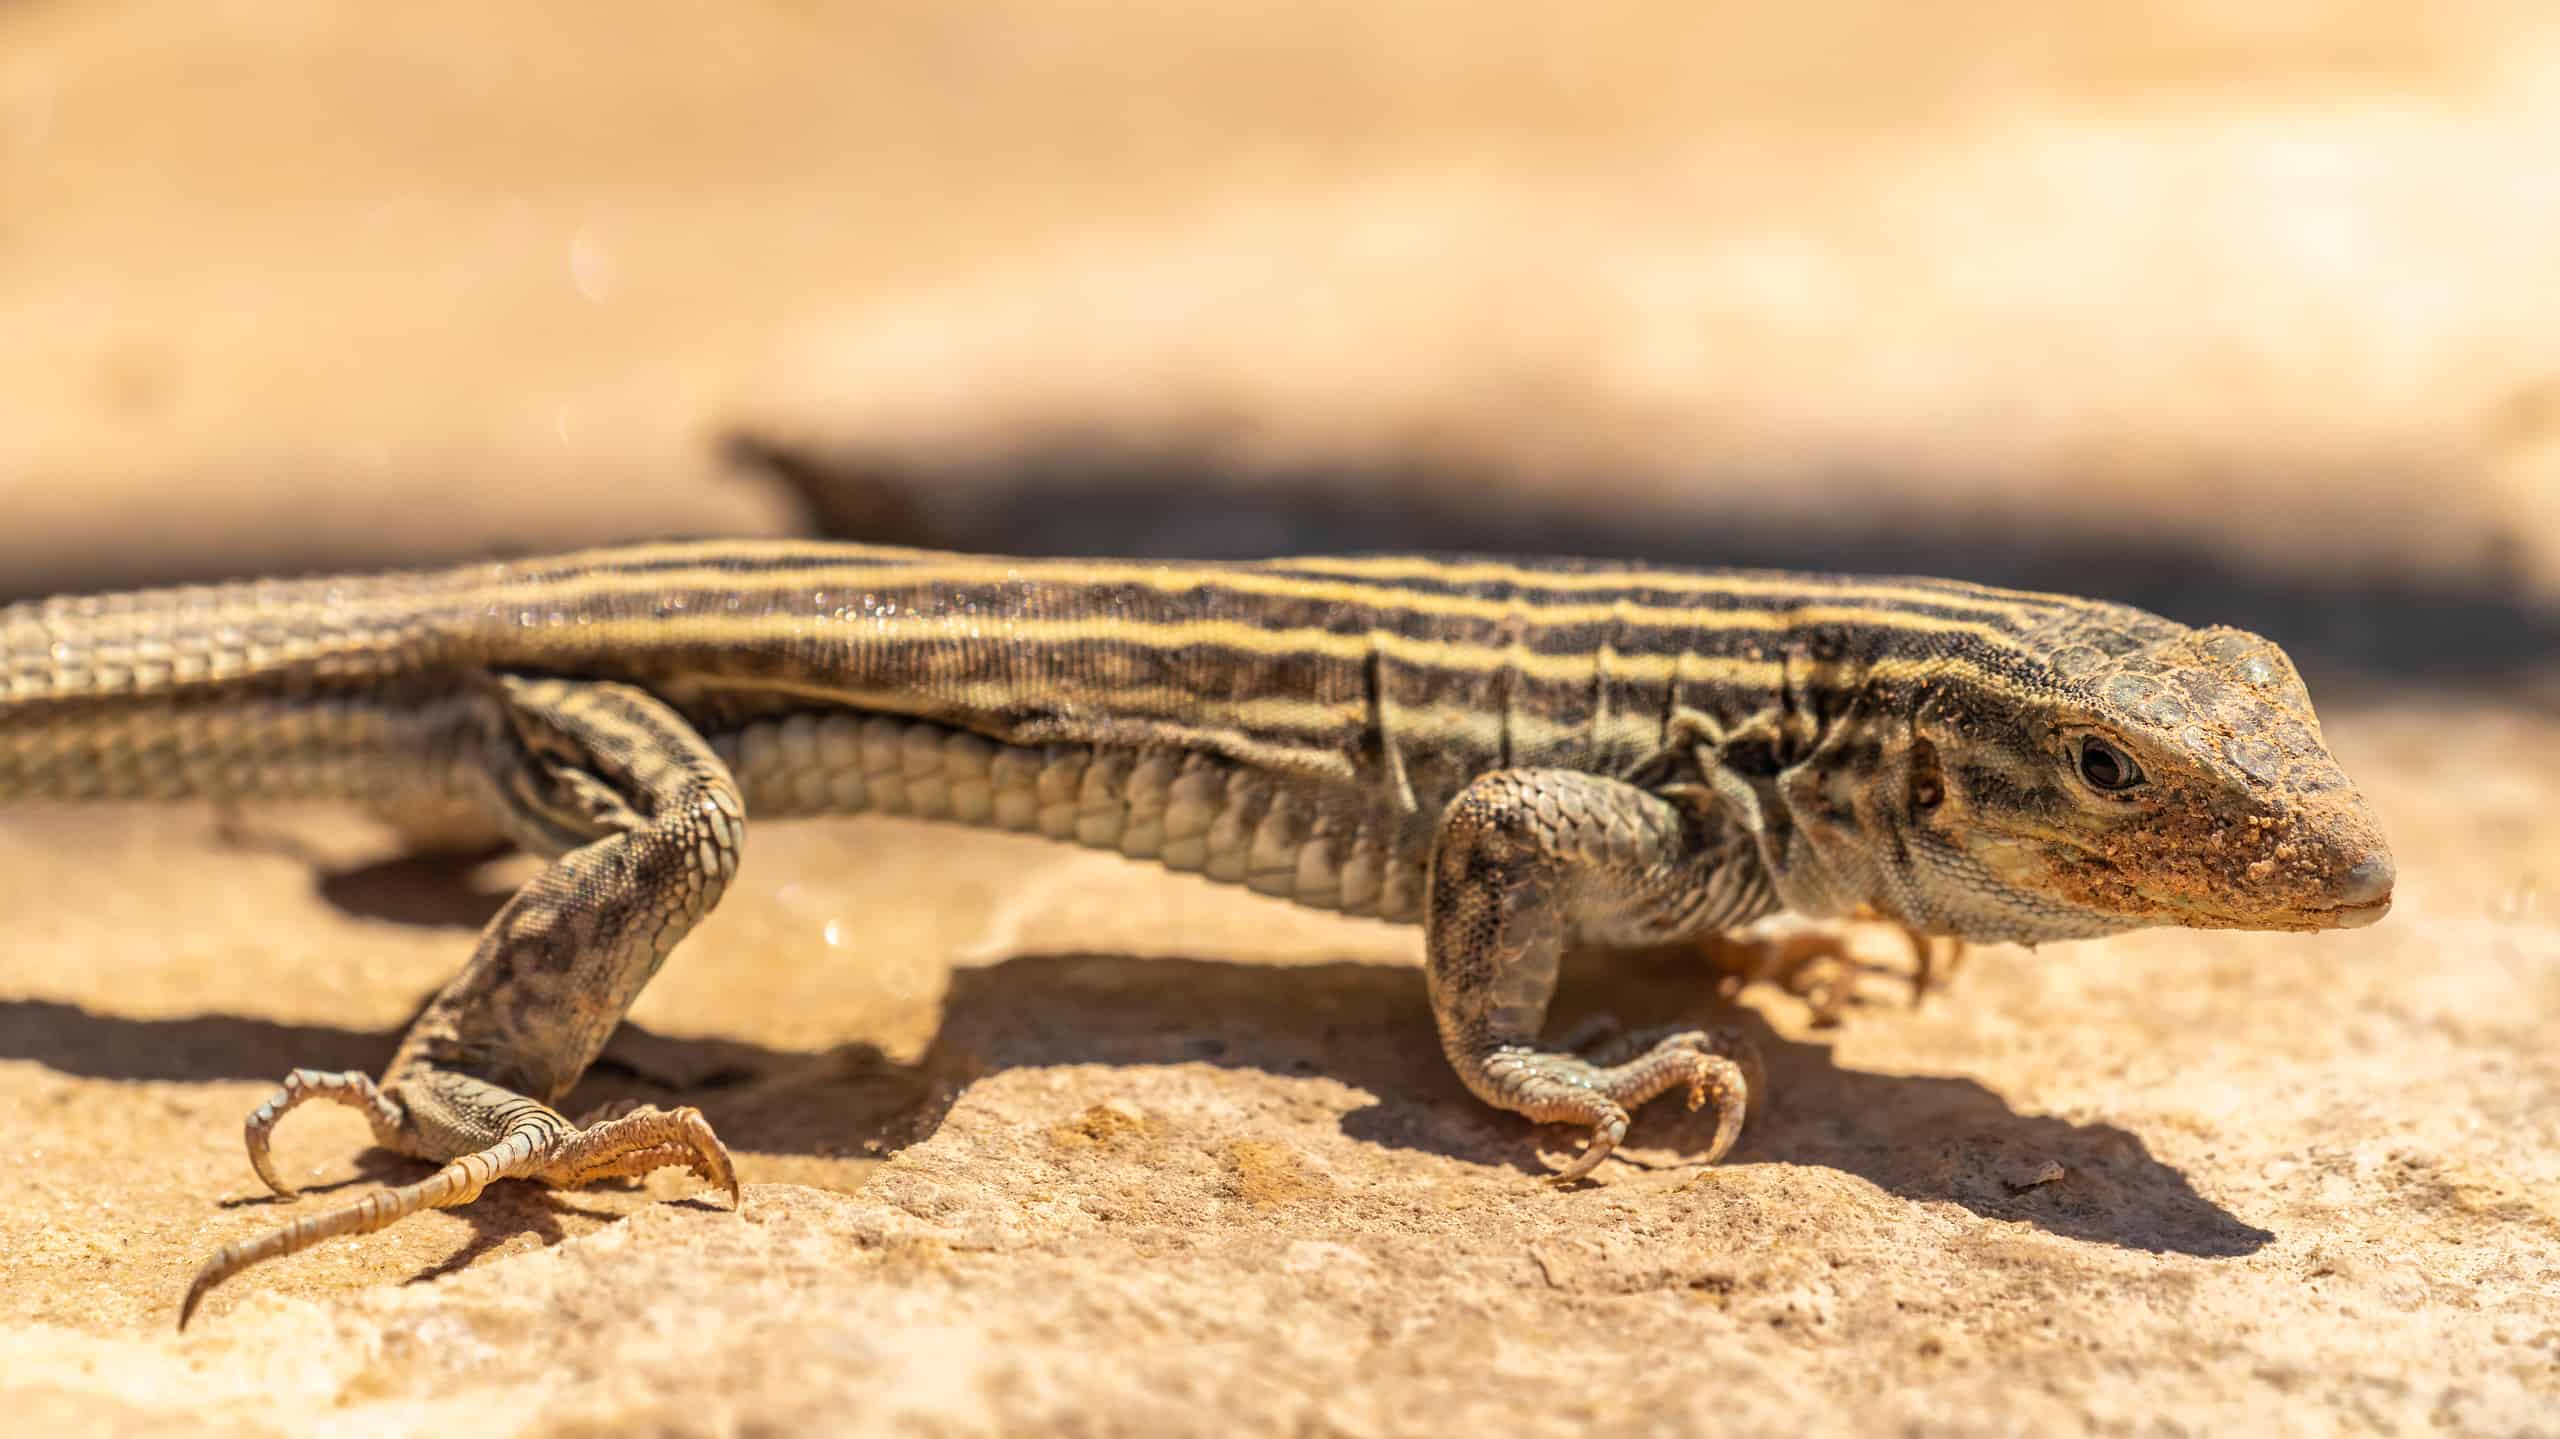 The New Mexico whiptail lizard (Cnemidophorus neomexicanus)